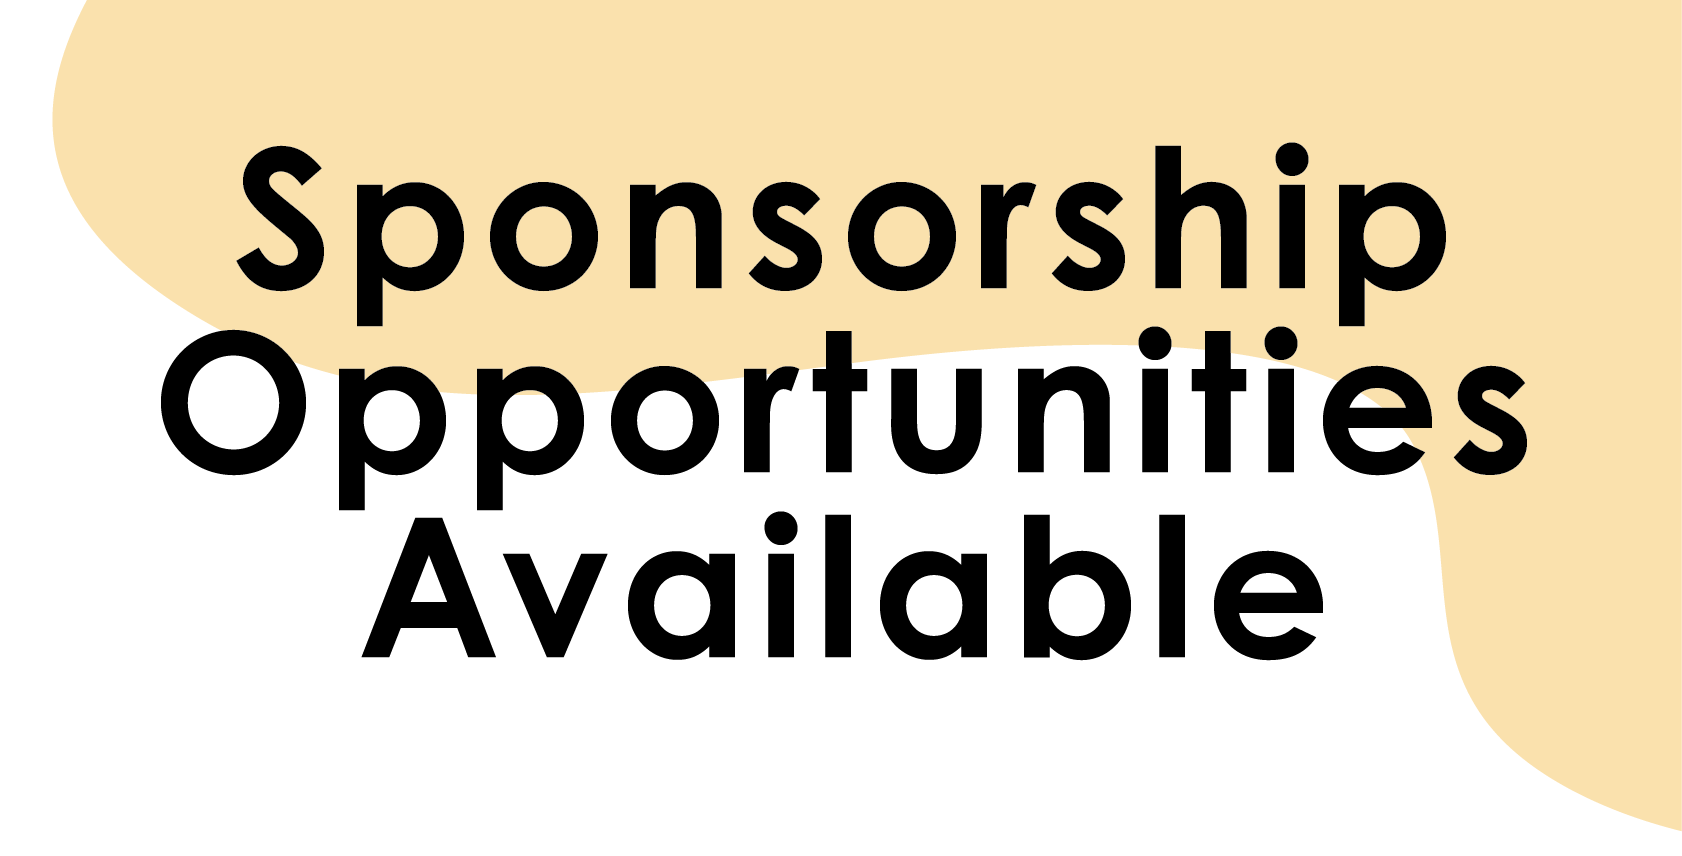 Sponsorship Oppertunities available.